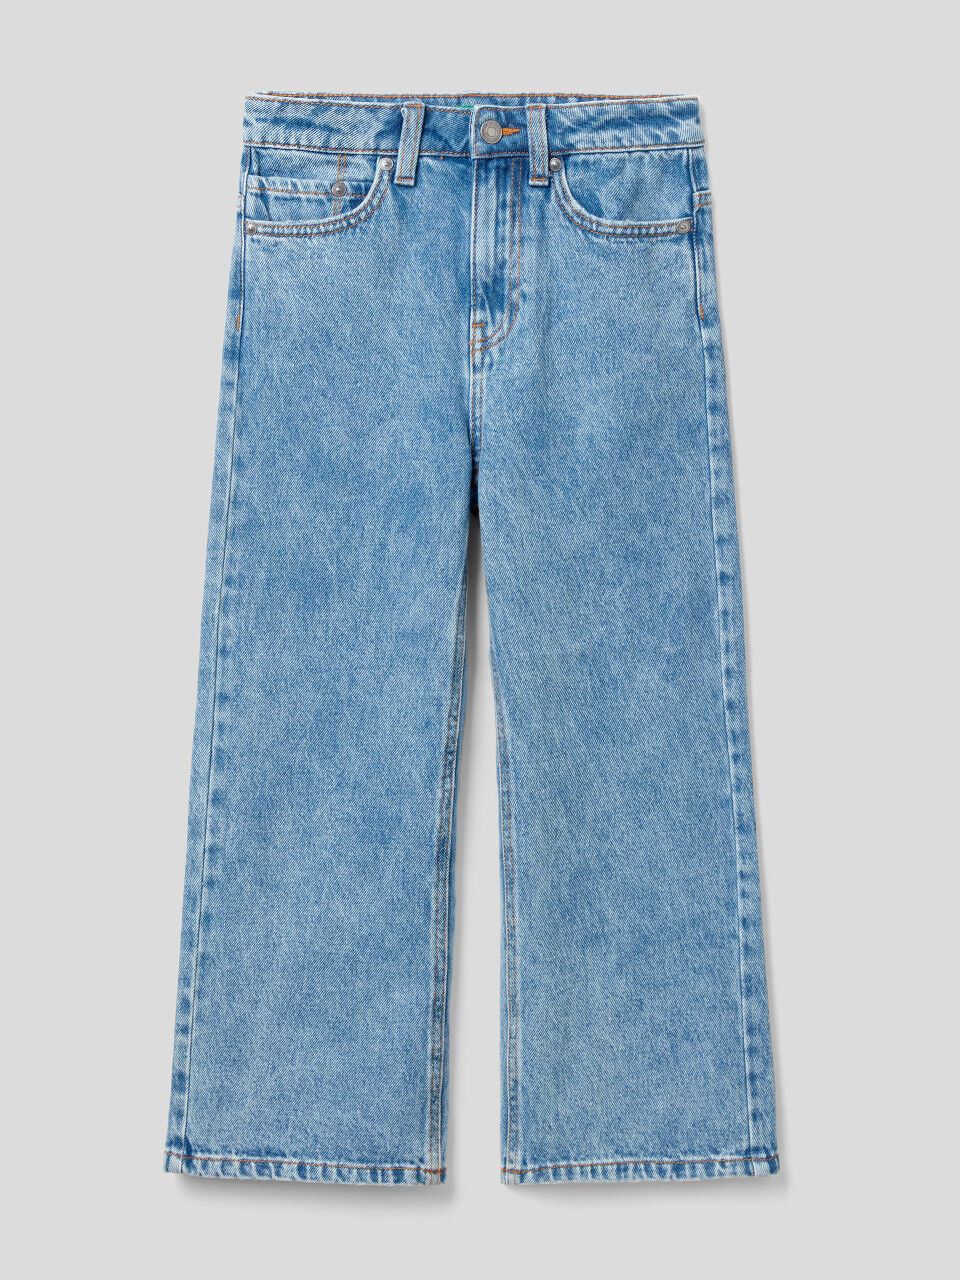 Latest Stylish Jeans Pants For Kids 2020-2021/ Boys Jeans Design Ideas/Kids Denim  Jeans | Kids jeans boys, Kids denim jeans, Stylish jeans